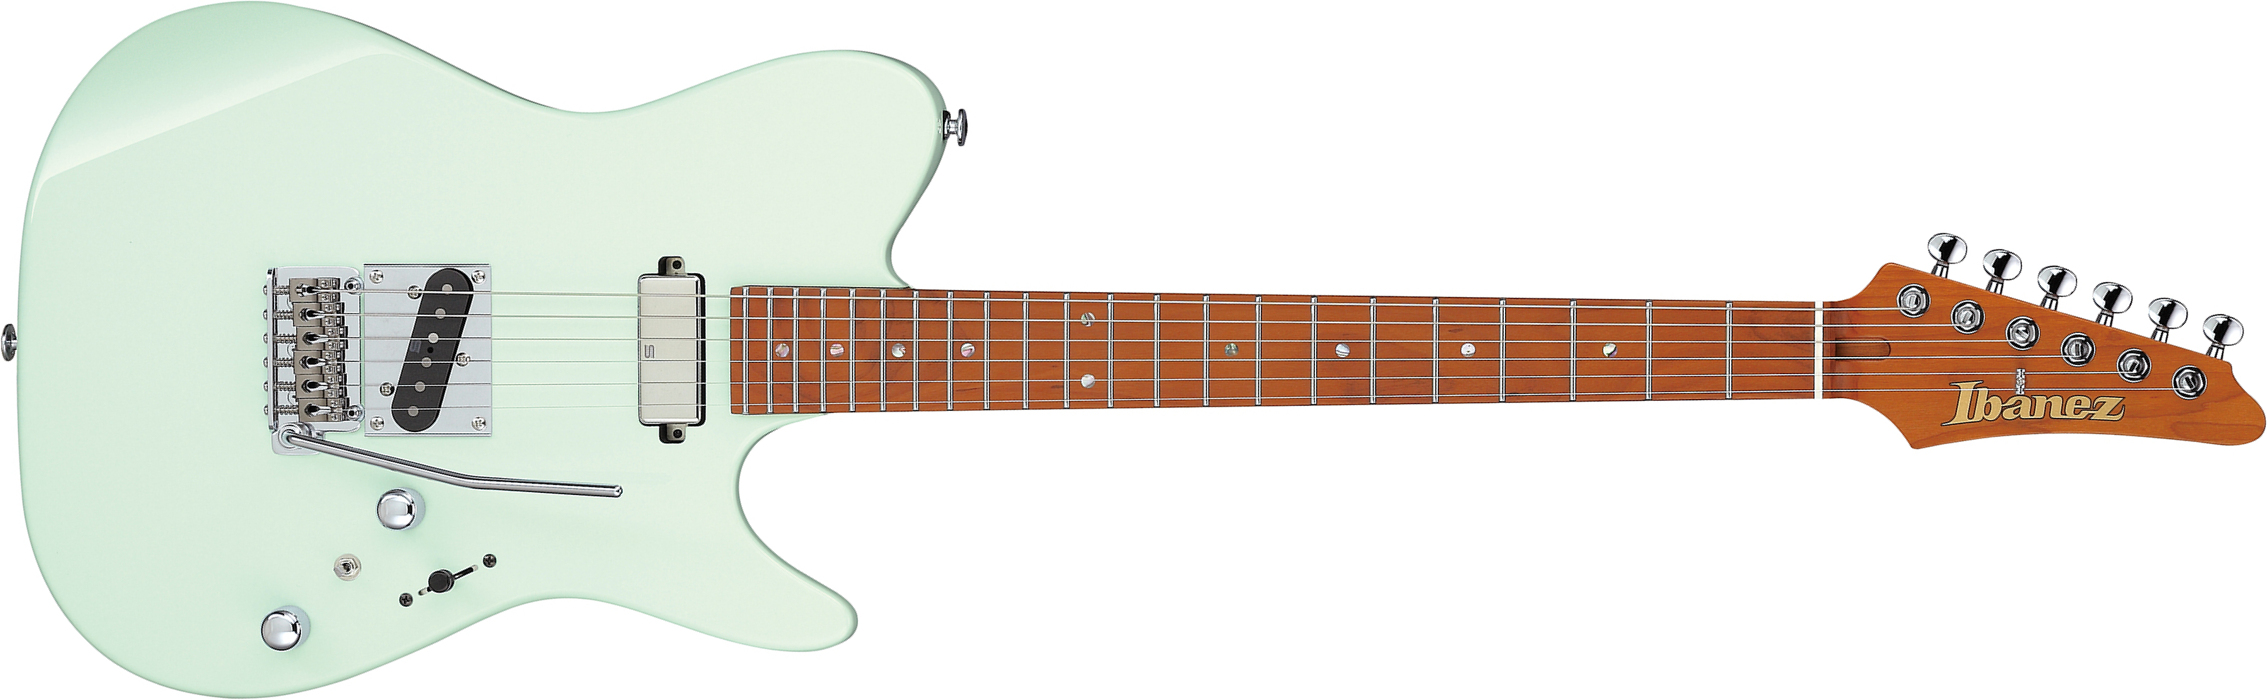 Ibanez Azs2200 Mgr Prestige Jap Smh Seymour Duncan Trem Mn - Mint Green - Tel shape electric guitar - Main picture